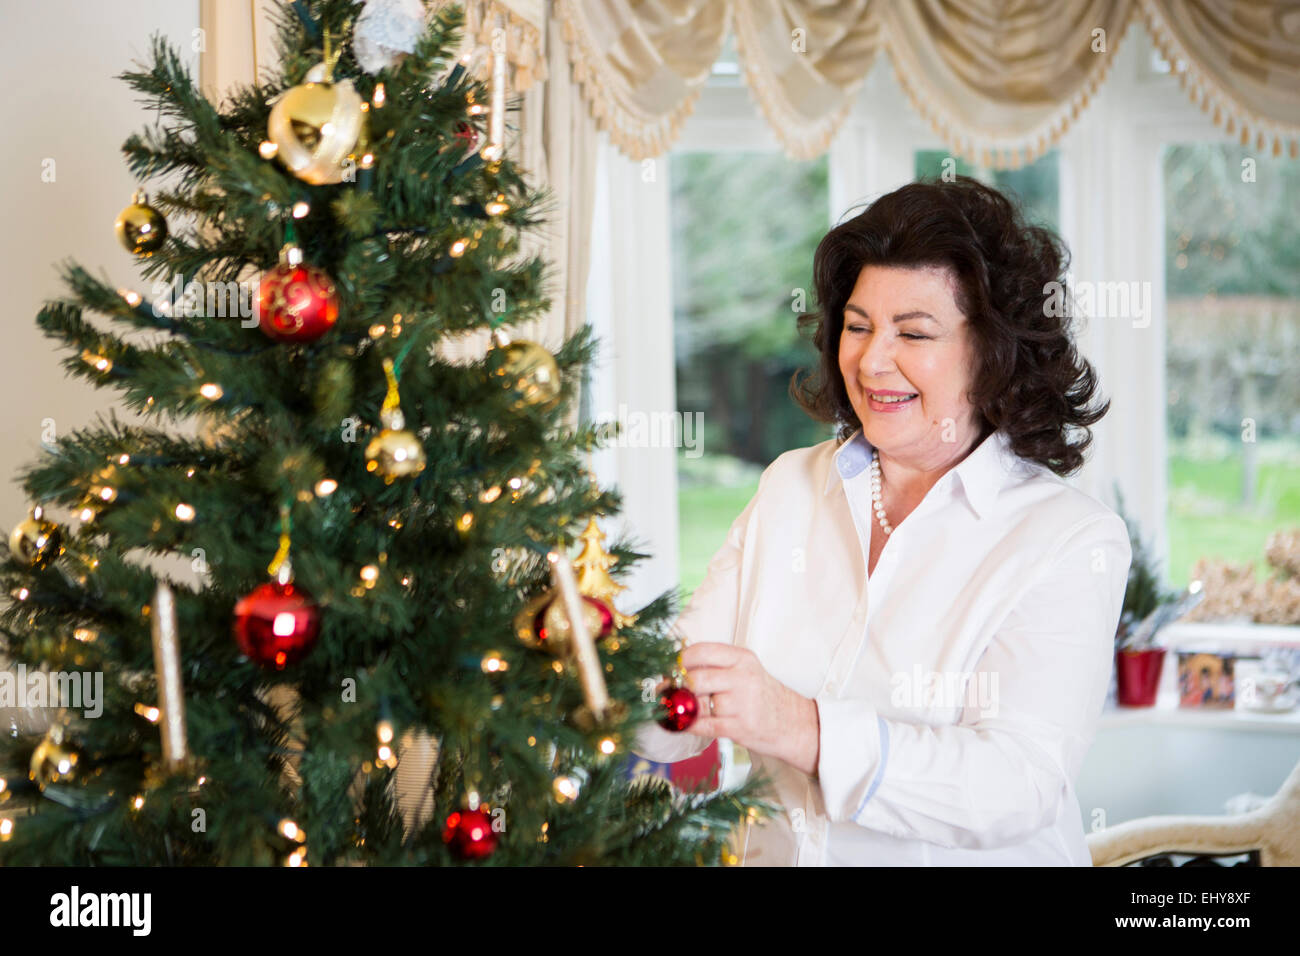 Senior woman decorating Christmas tree Stock Photo